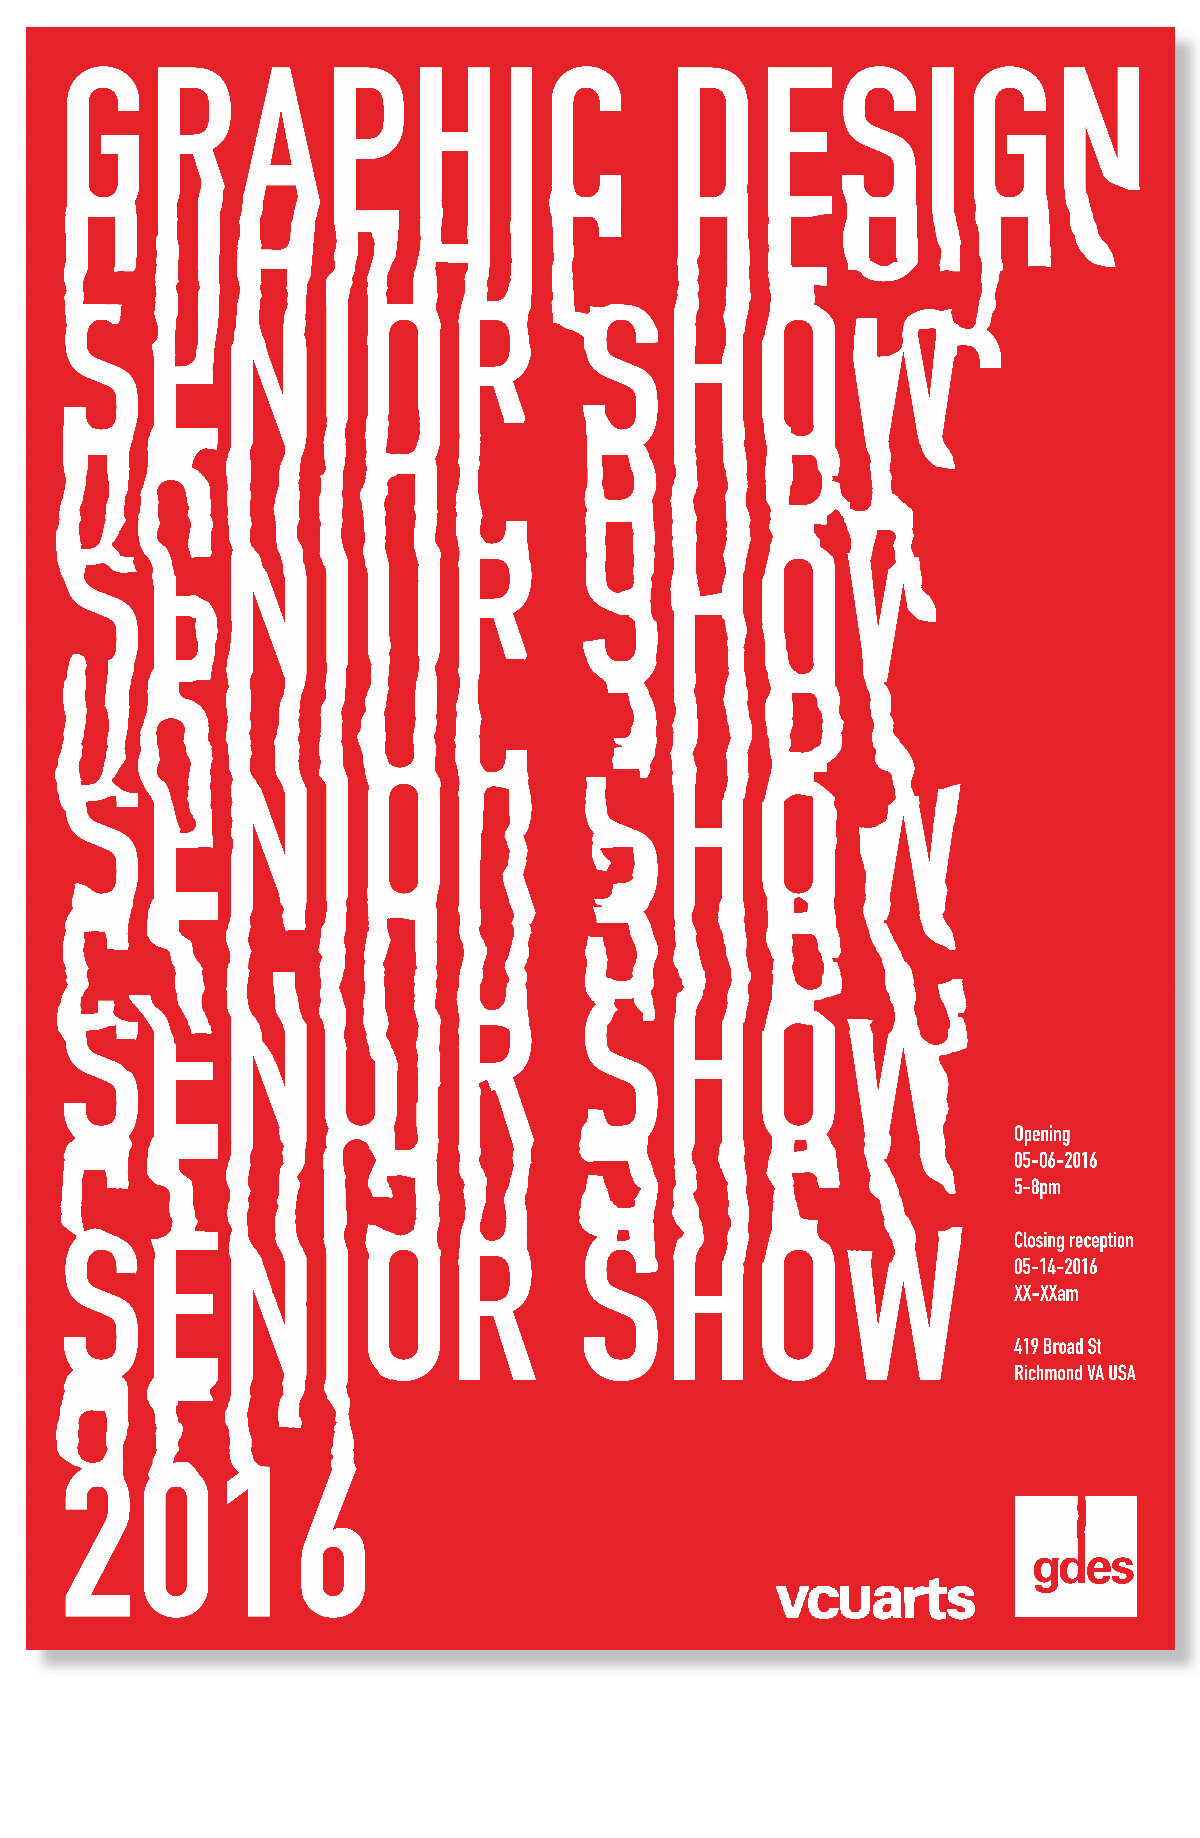 posters_seniorshow.jpg